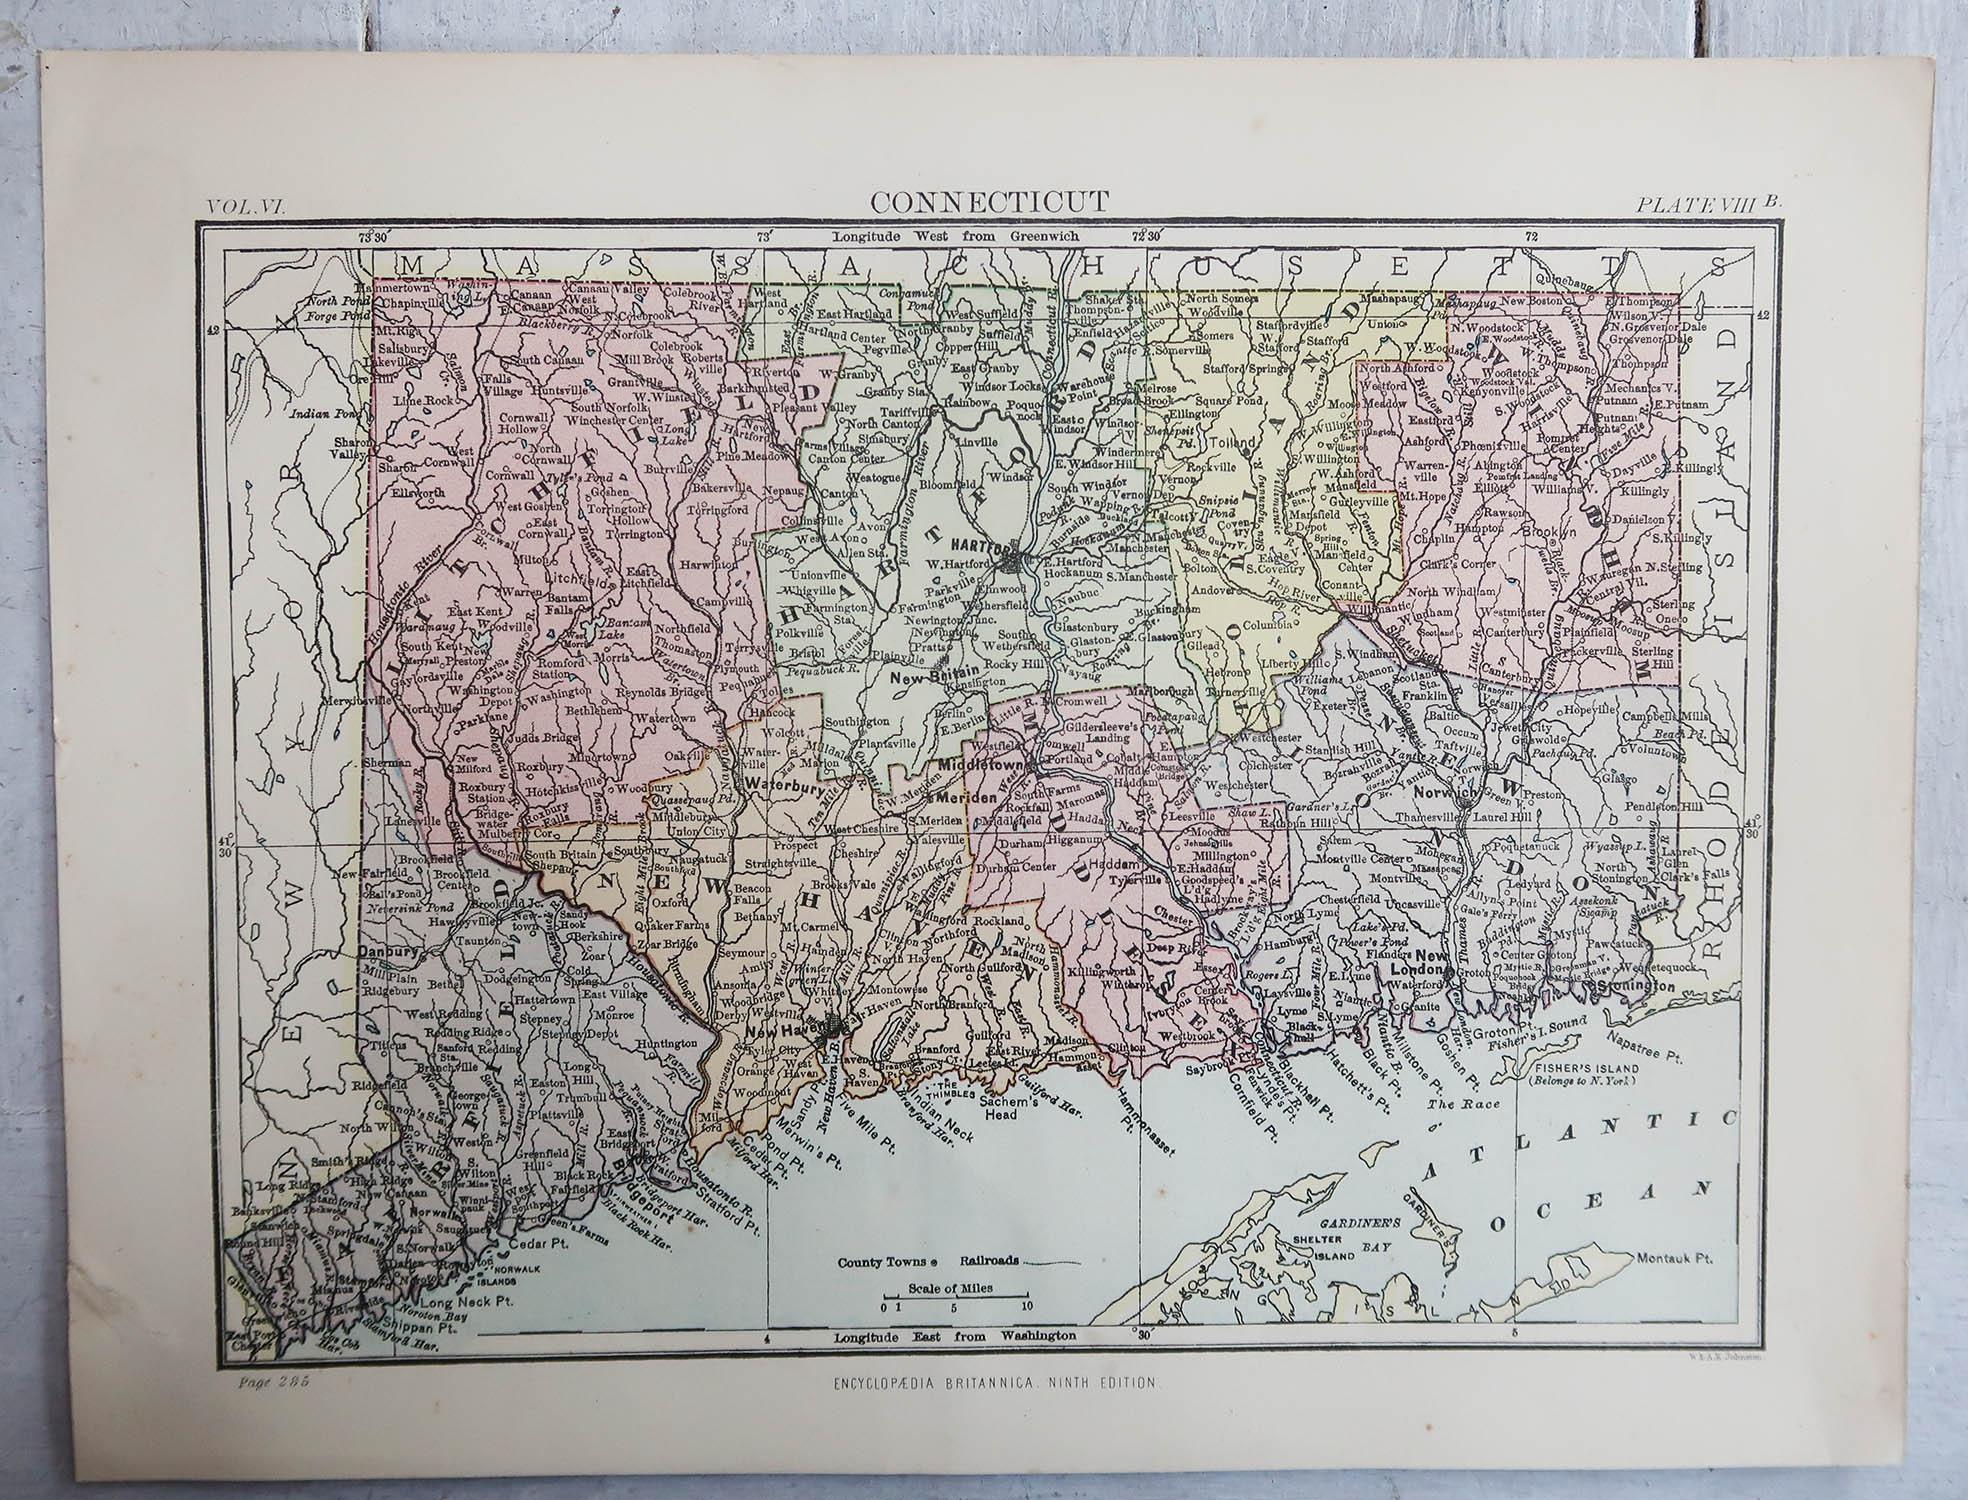 Scottish Original Antique Map of The American State of Connecticut, 1889